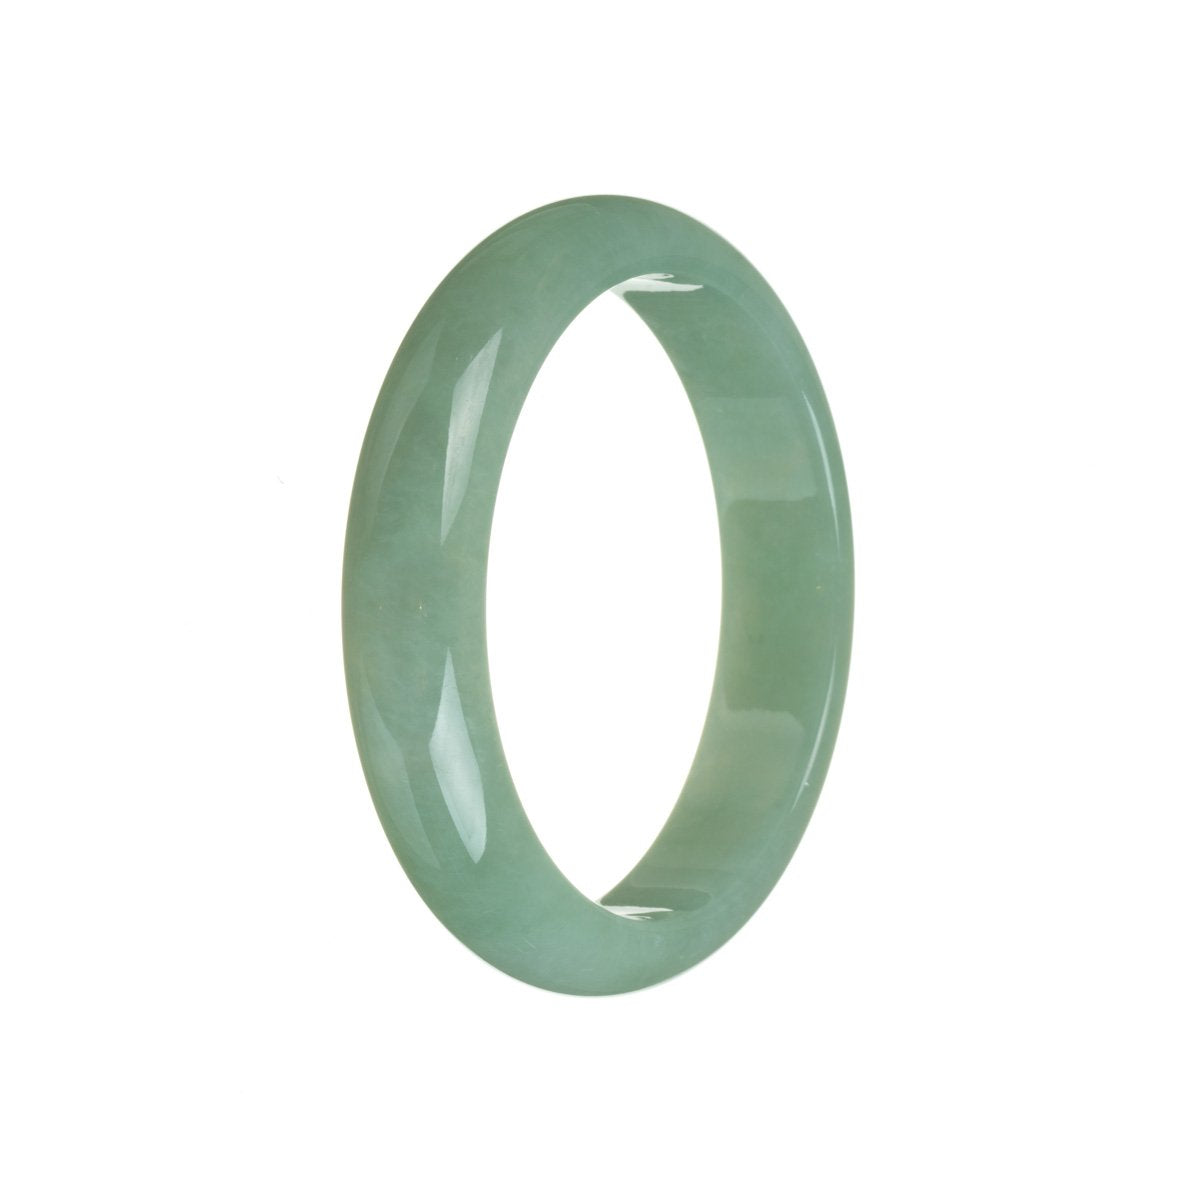 Certified Grade A Green Burmese Jade Bangle Bracelet - 58mm Half Moon